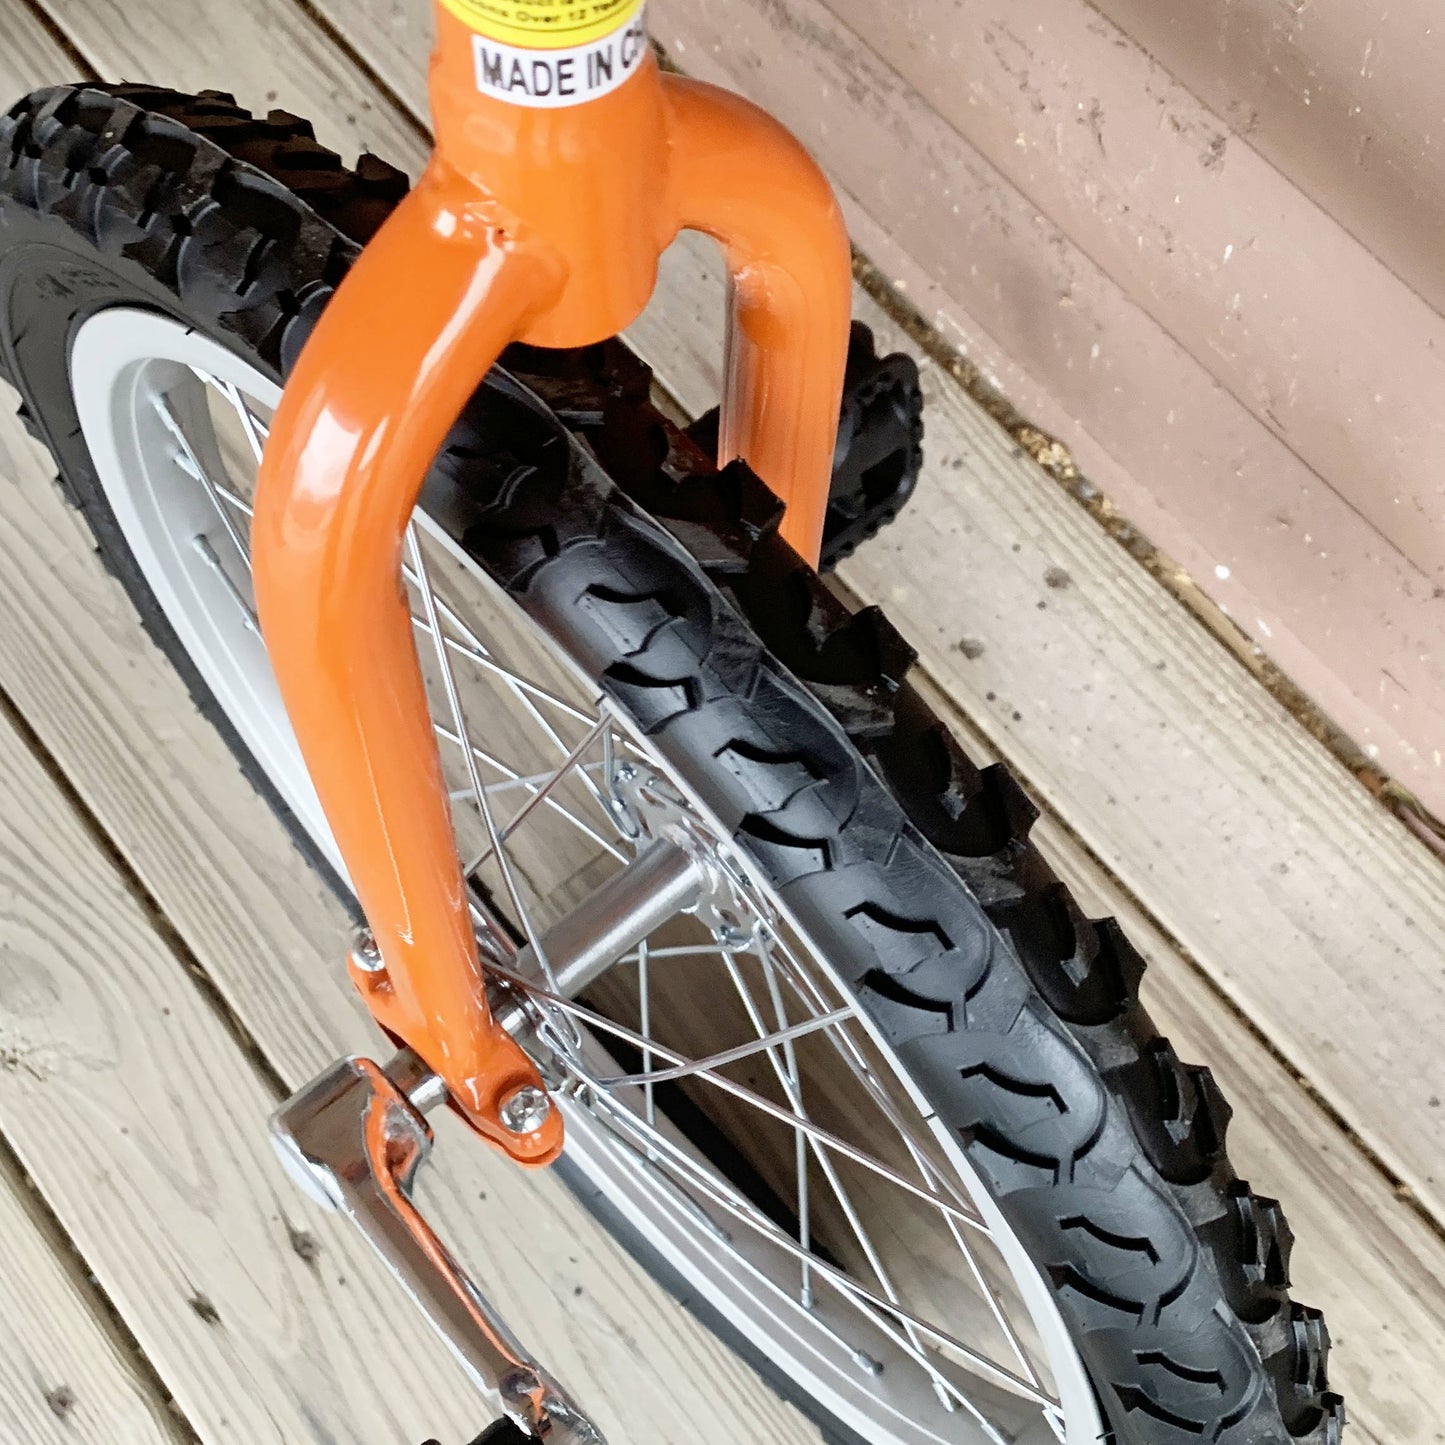 Unifly 18" Beginner Training Unicycle - A Frame - Aluminum Wheels